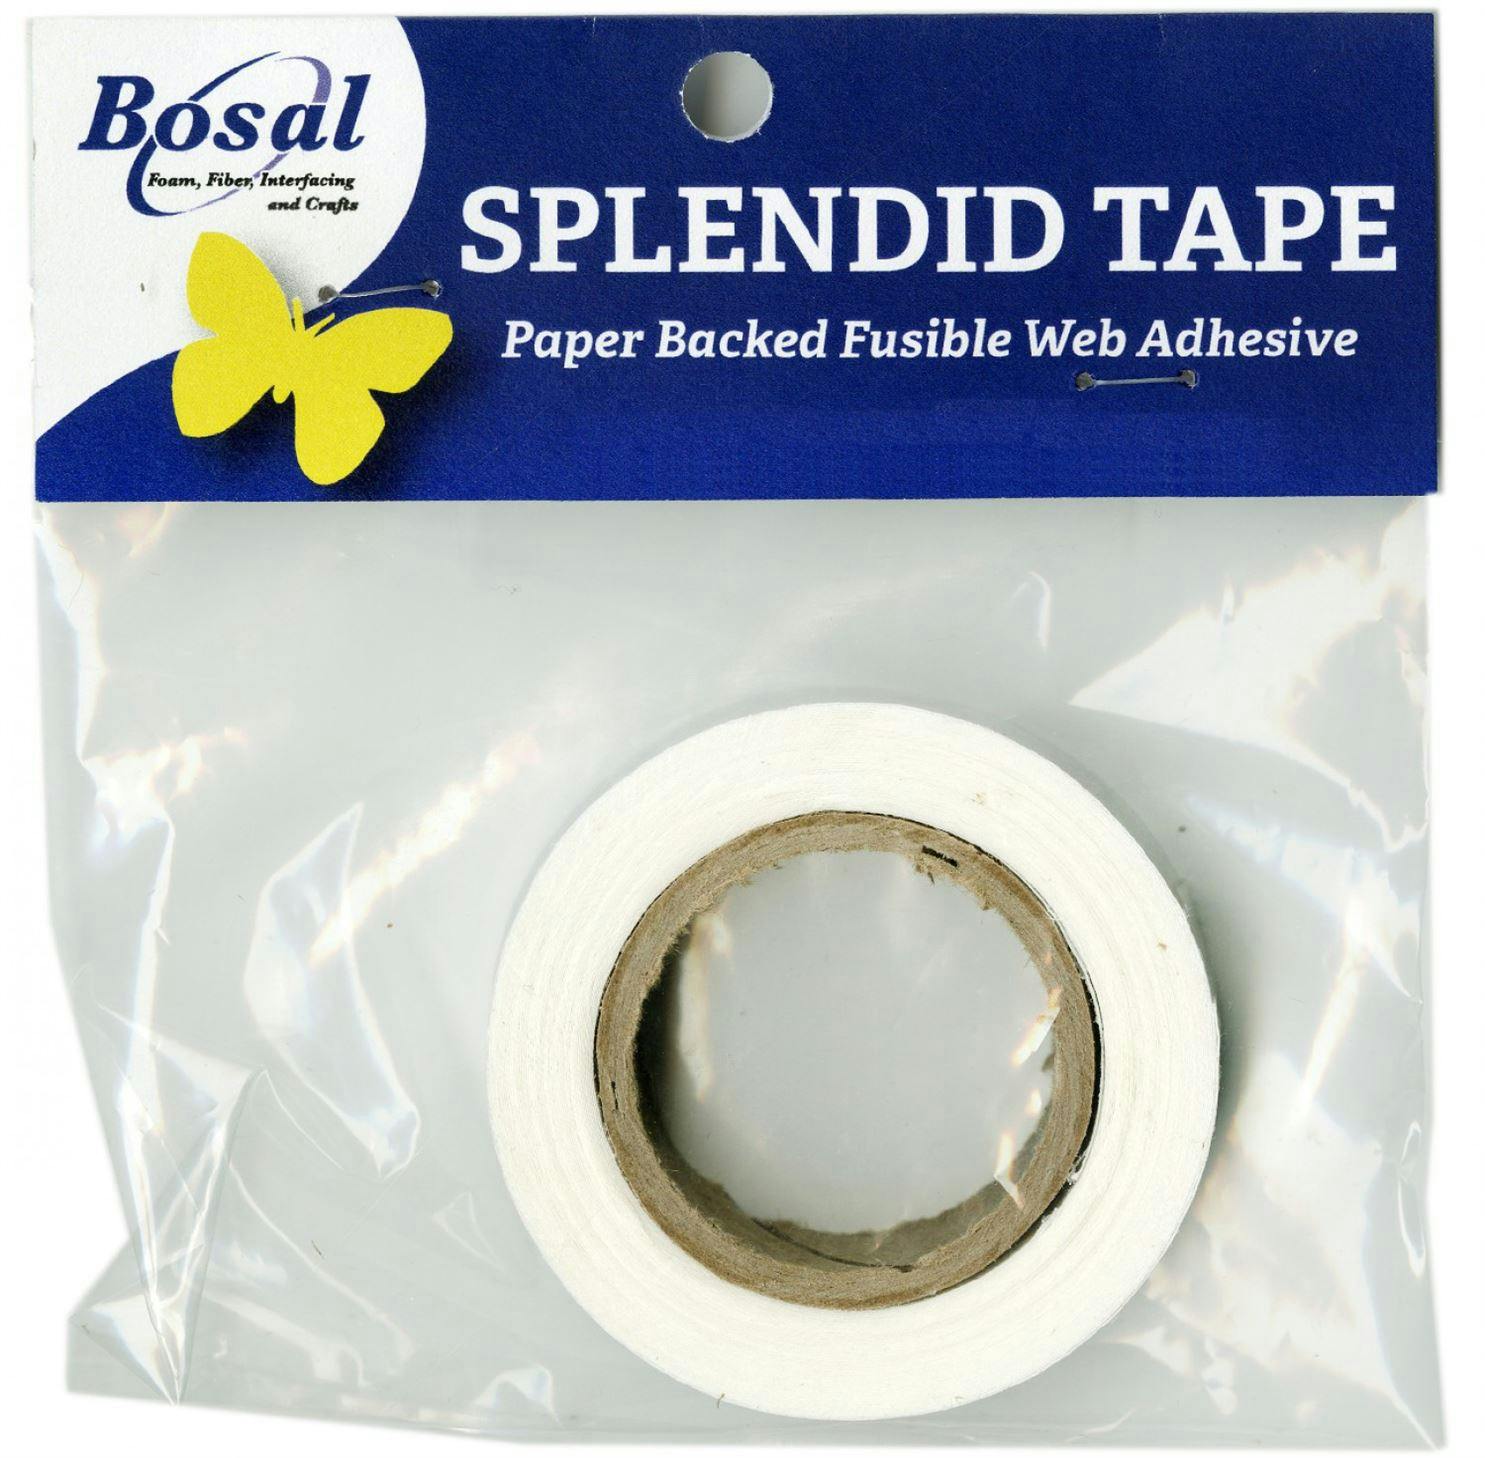 Bosal splendid tape